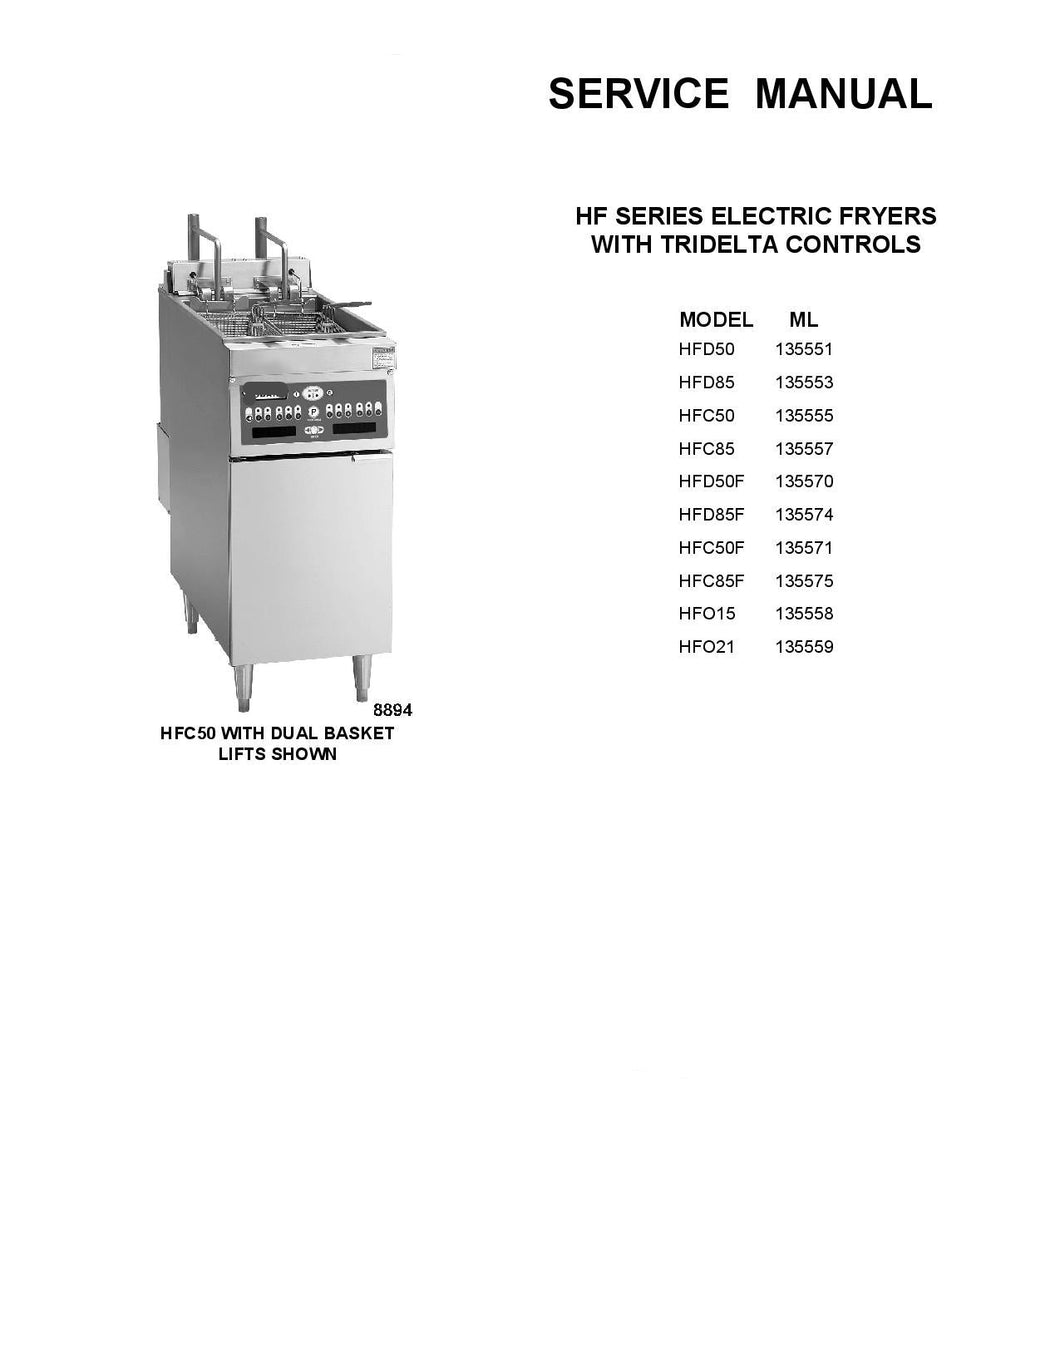 HOBART MODEL HF SERIES ELECTRIC FRYER SERVICE, TECHNICAL AND REPAIR MANUAL